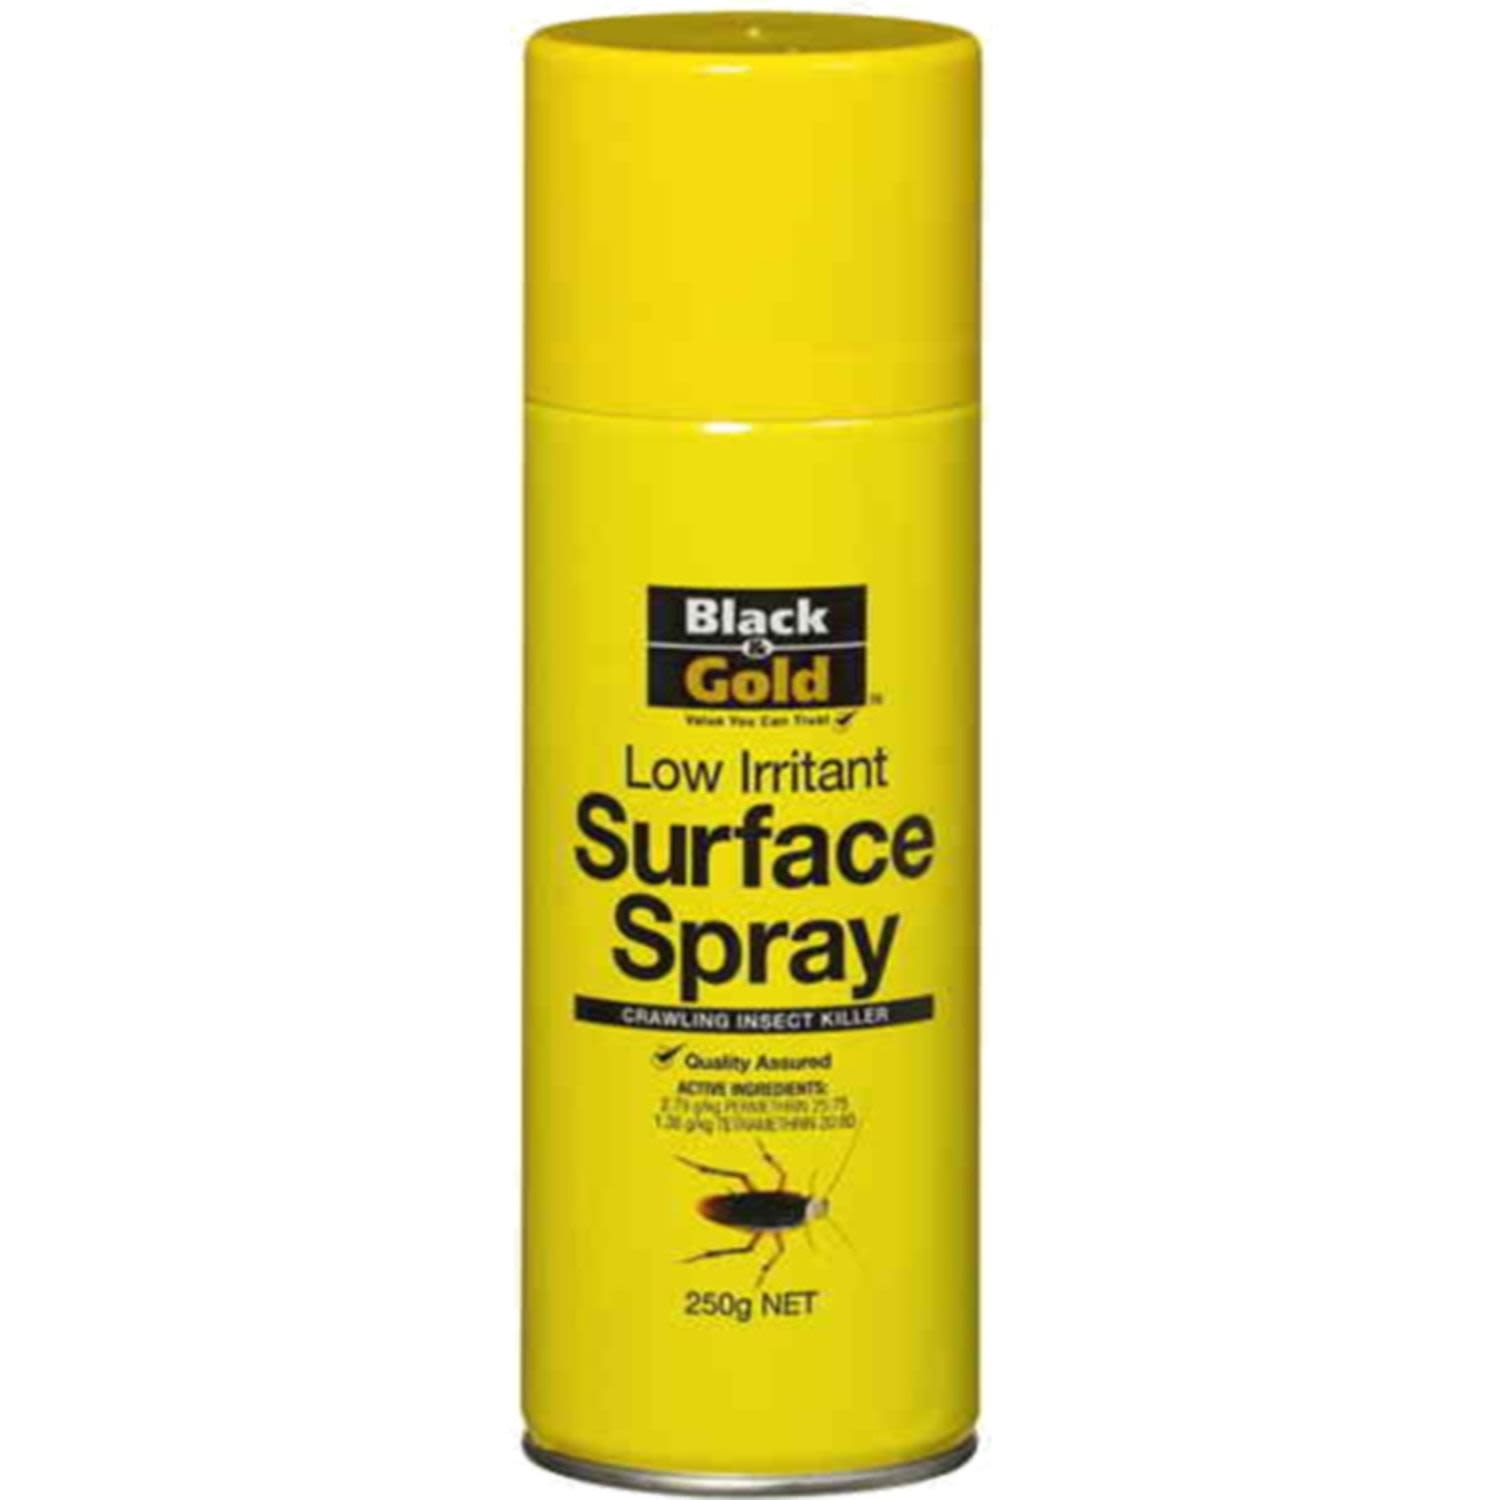 Black & Gold Surface Spray Low Irritant, 250 Gram